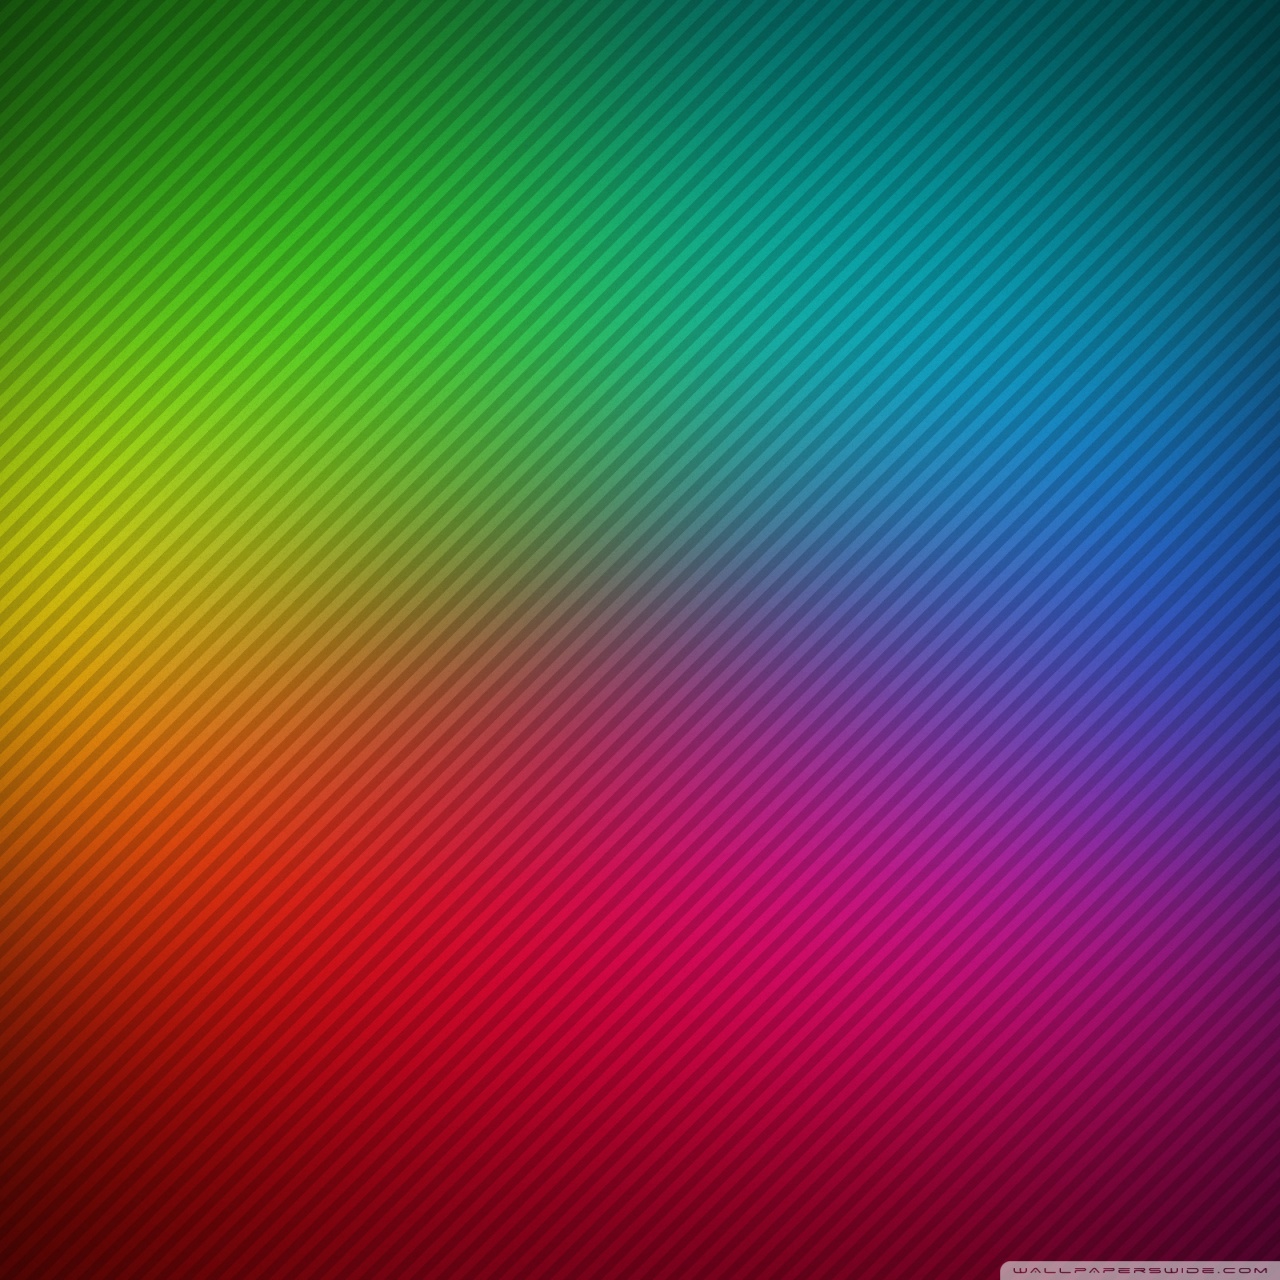 RGB Spectrum Ultra HD Desktop Background Wallpaper for 4K UHD TV